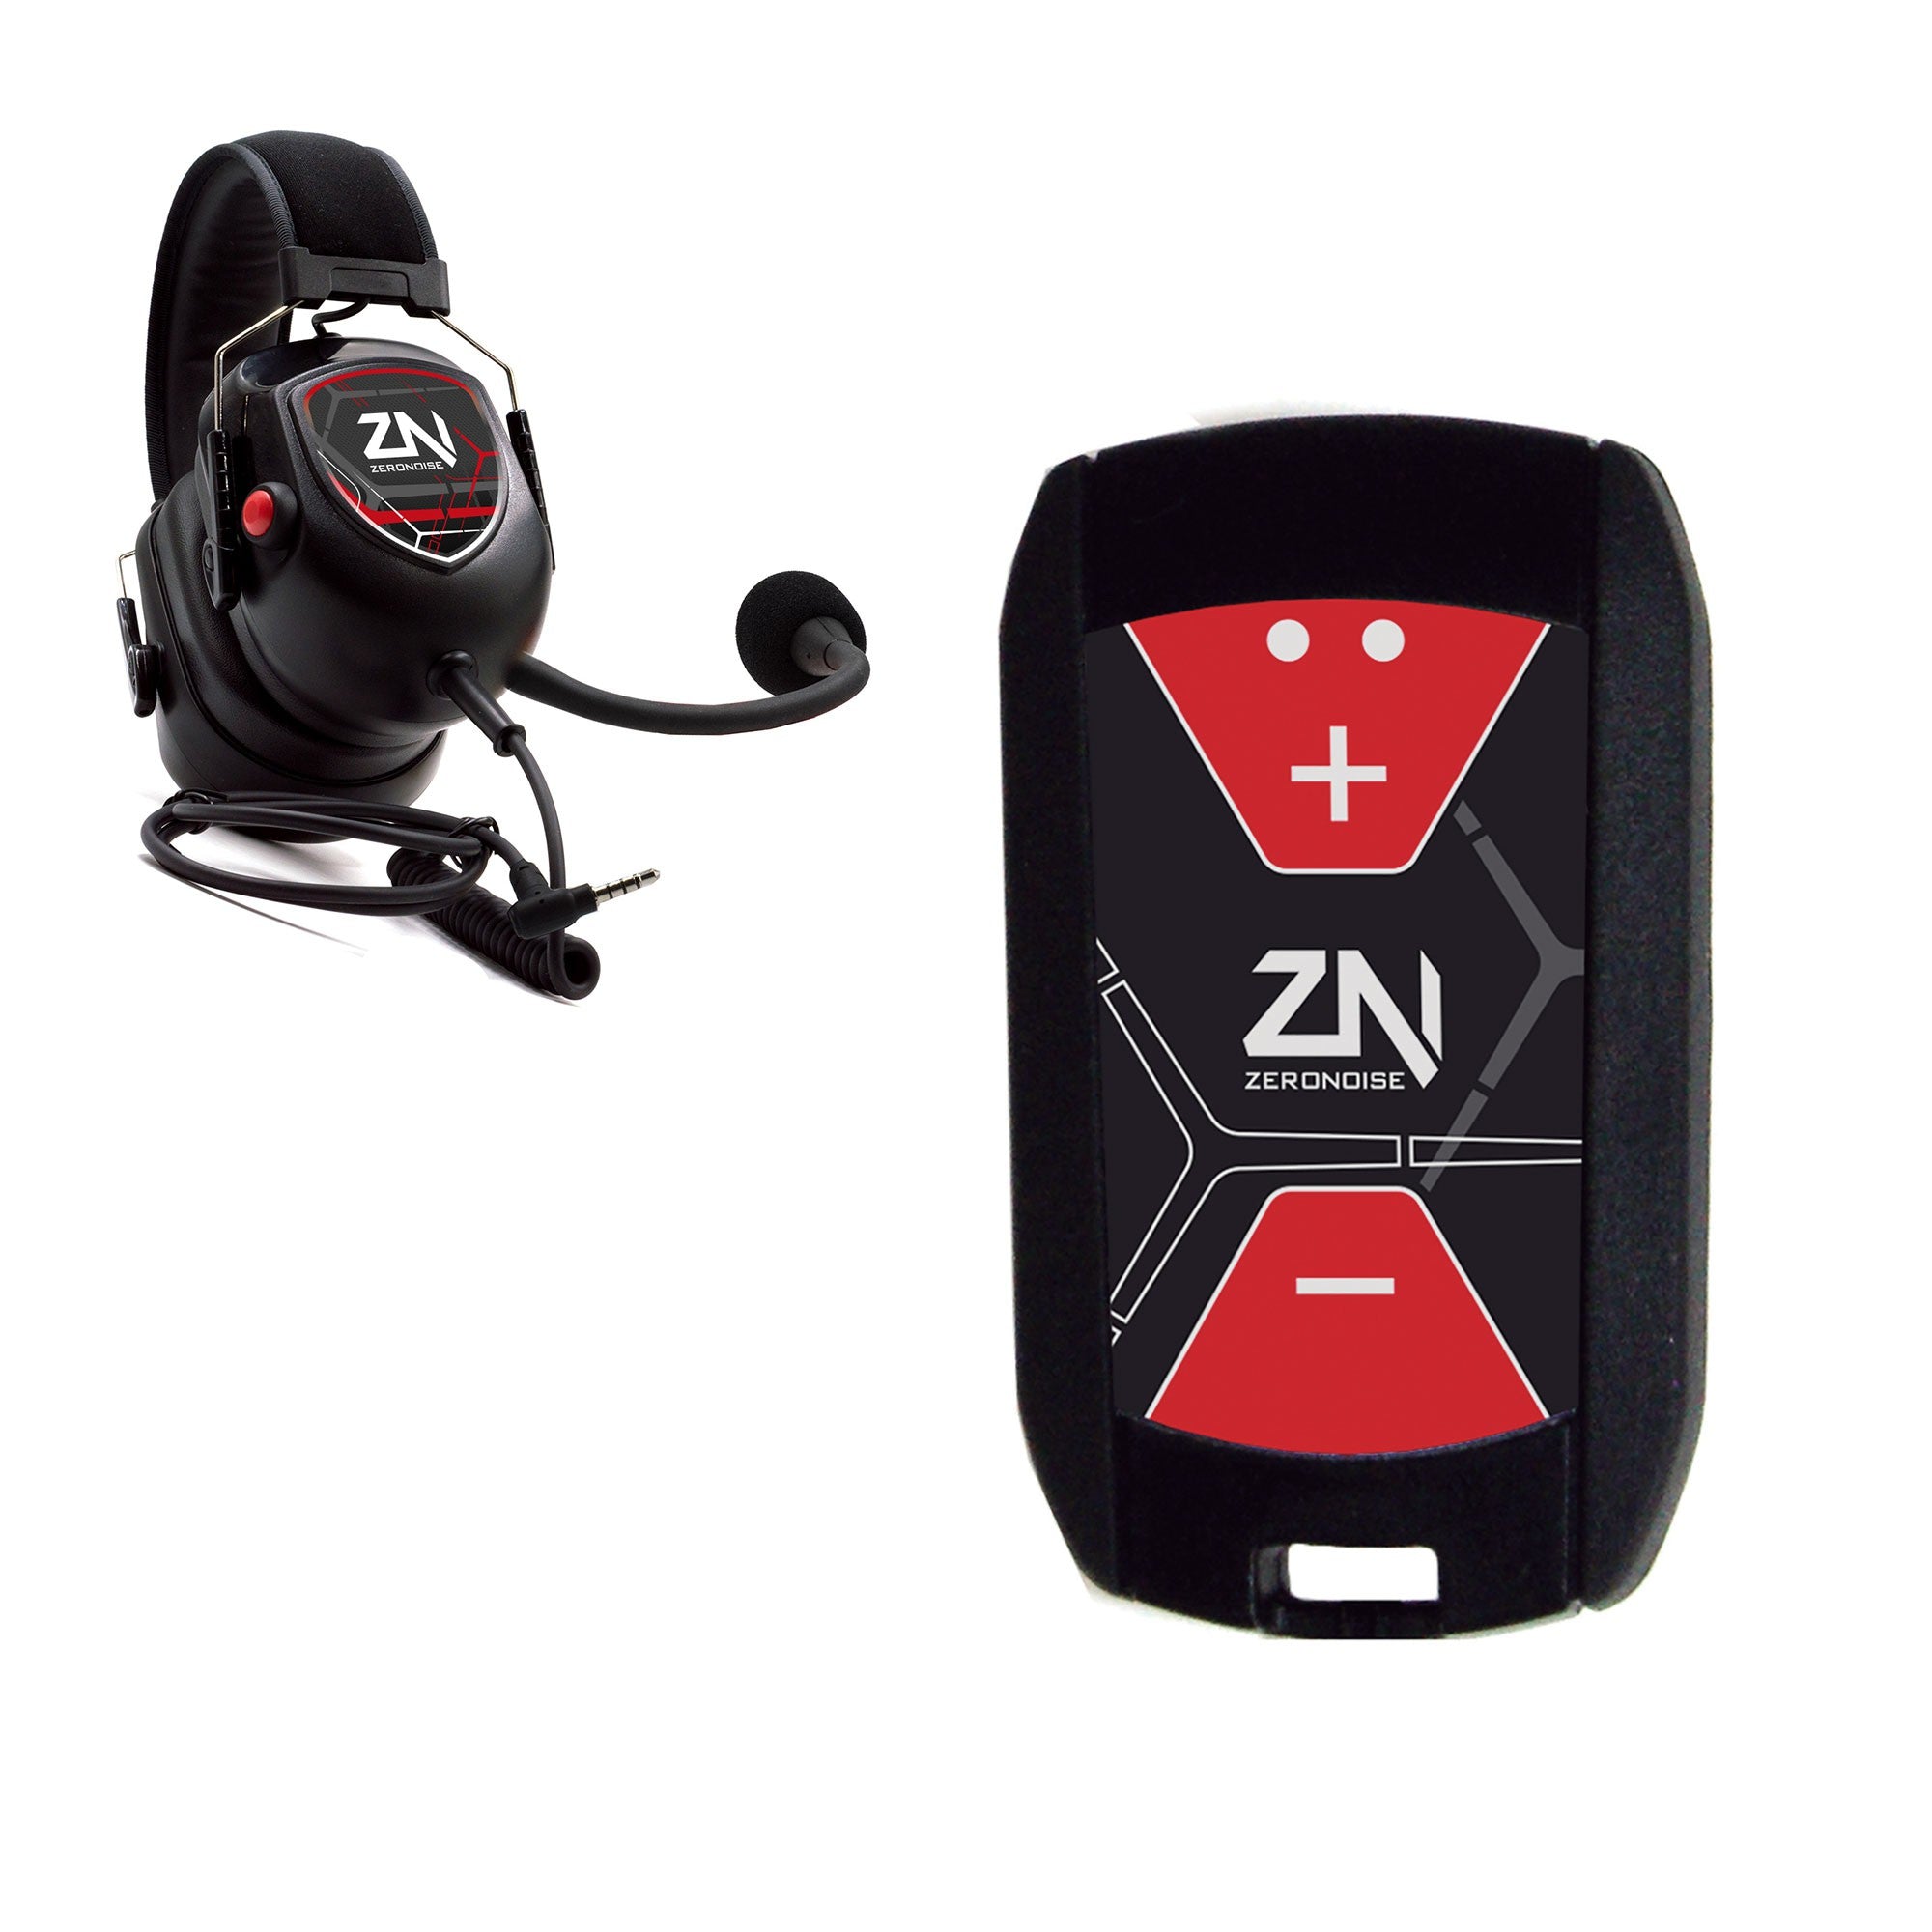 ZERONOISE 6100034 PIT-LINK TRAINER Bluetooth Communication Kit, iPhone compatible headset Photo-1 